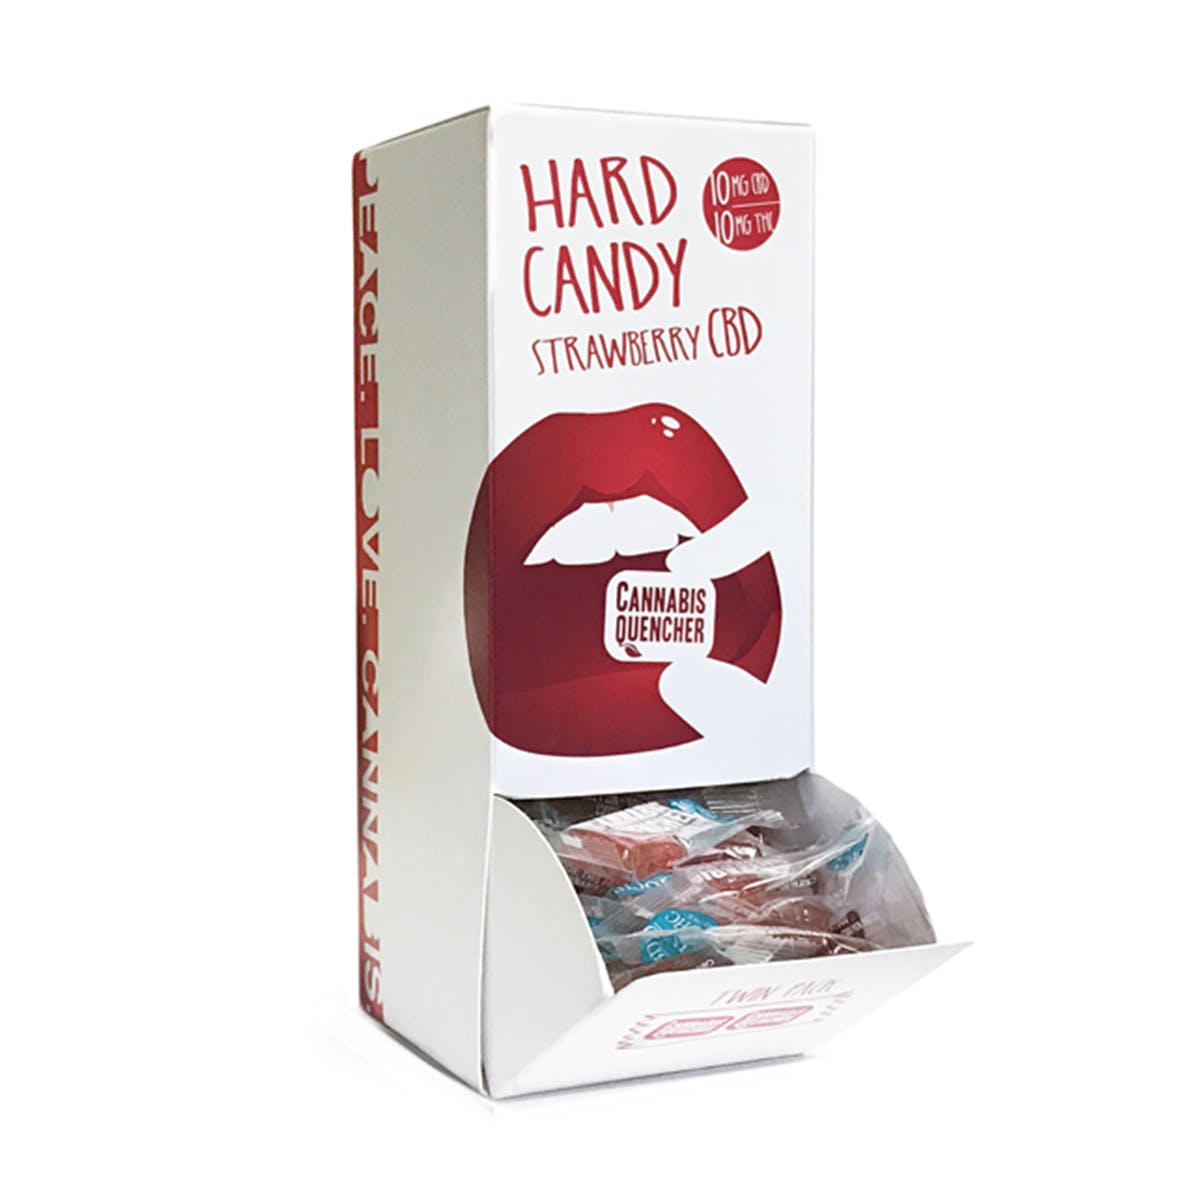 Strawberry Cannabis Quencher CBD Hard Candy - 10mg